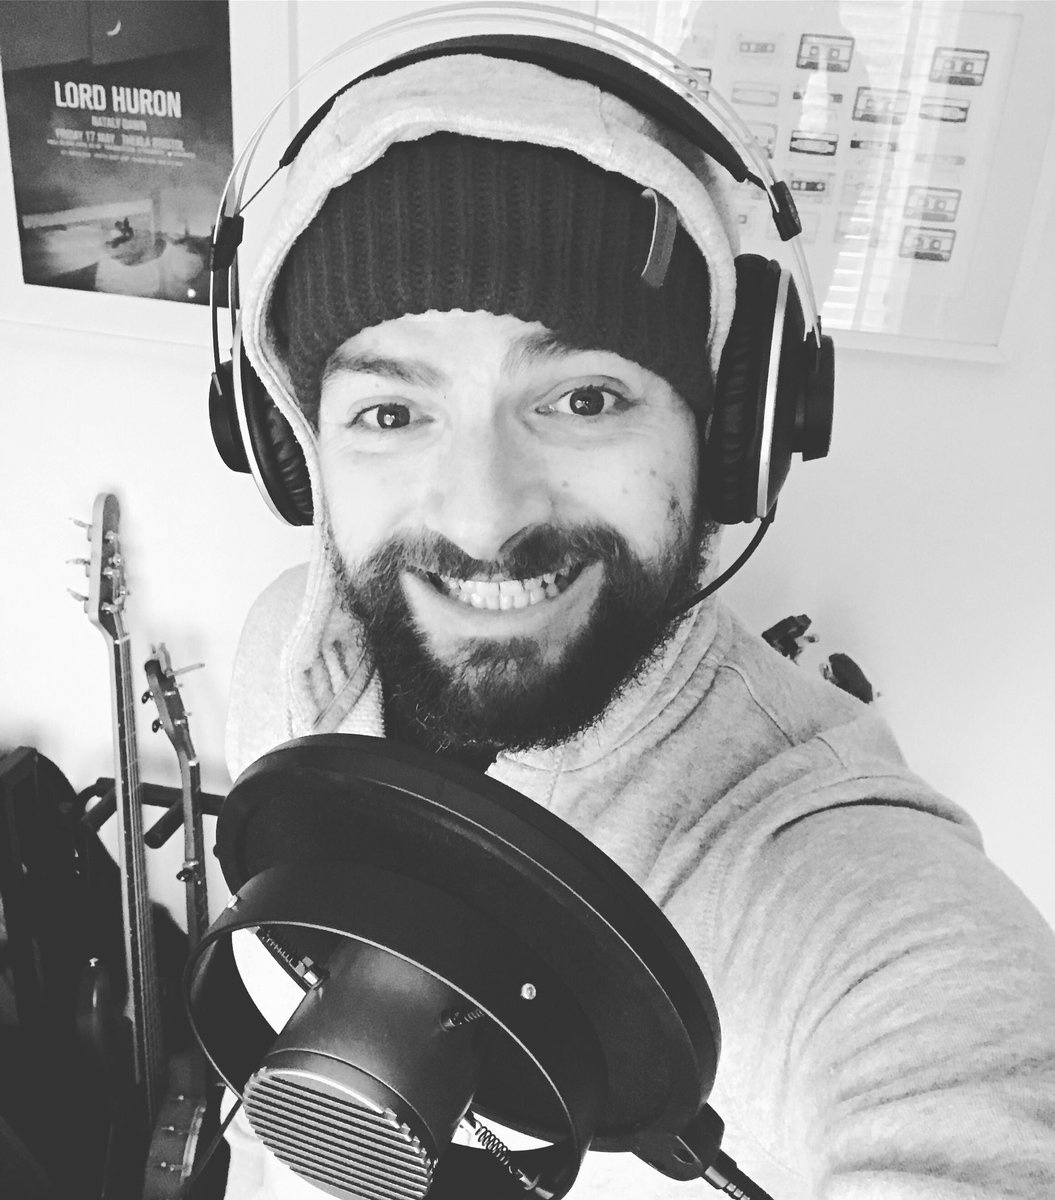 On the mic.
.
#microphone #sontronics #singer #country #music #countrymusic #ukcountry #ukcountrymusic #britishcountry #britishcountrymusic #newmusic #newcountry #countrymusiclover #ilovecountrymusic #corona #beard #recording #studio #homestudio #popshield #countrysinger